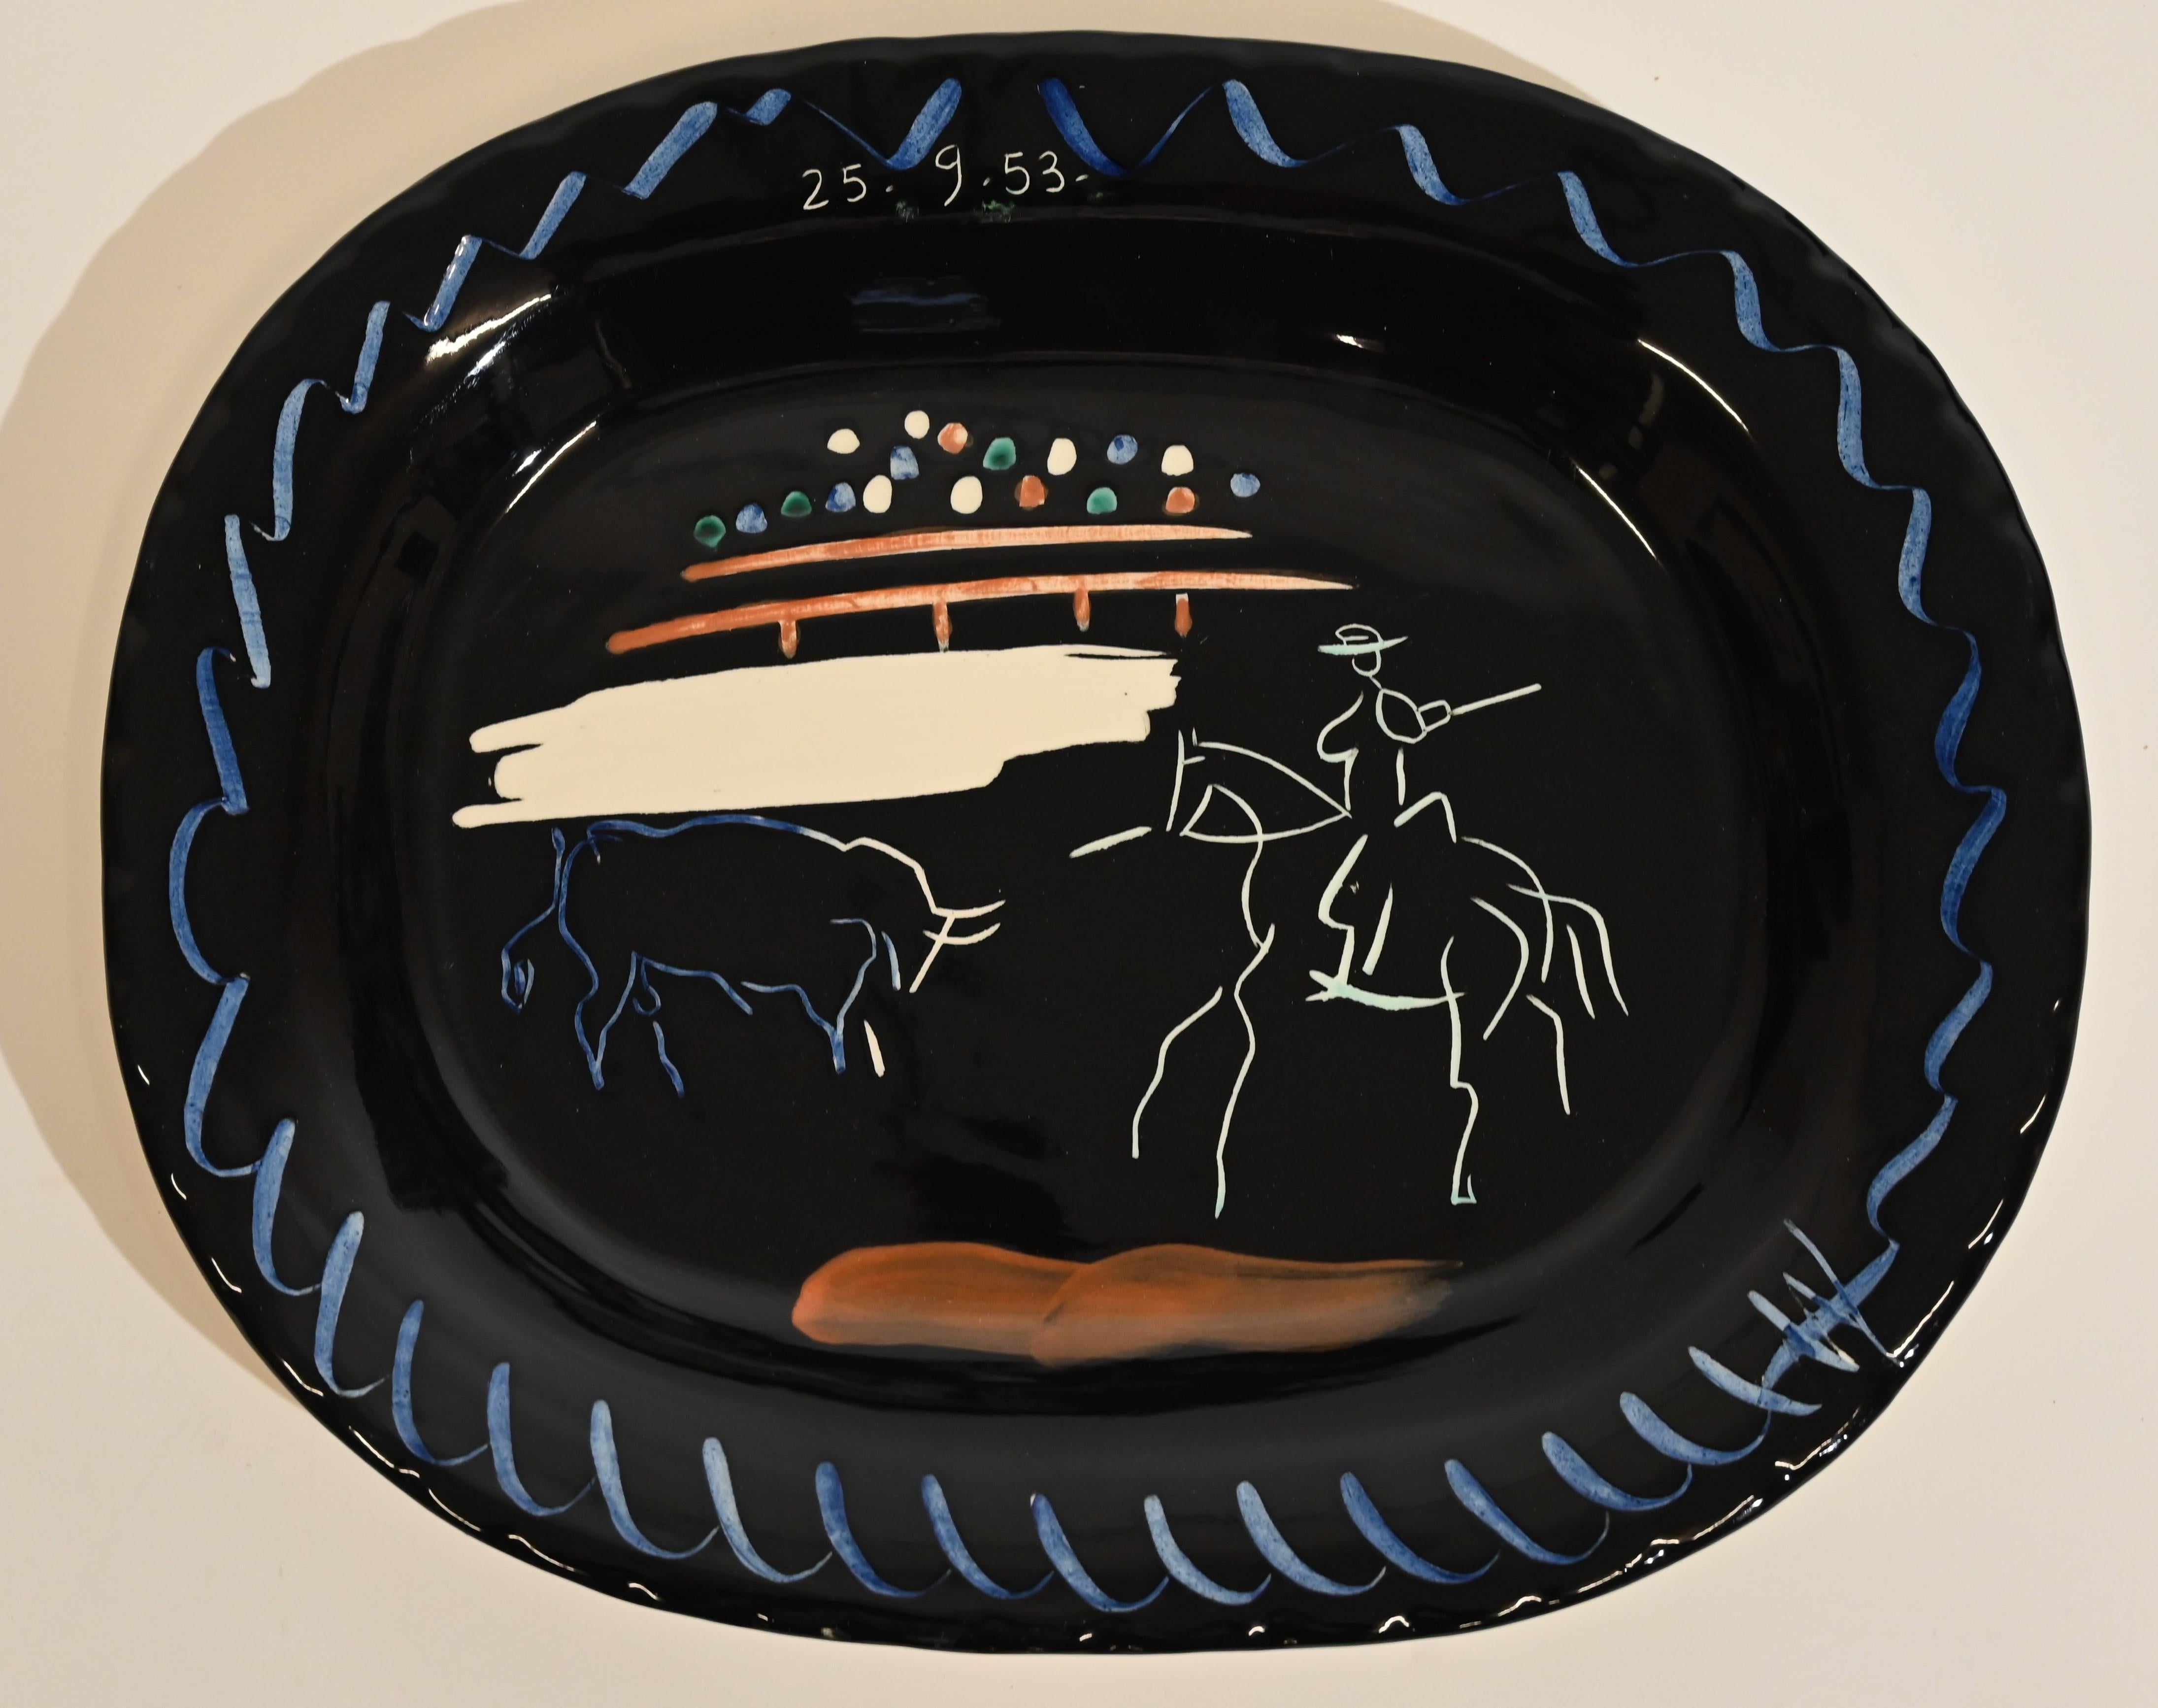 Corrida sur fond noir ceramic plate by Pablo Picasso dated 